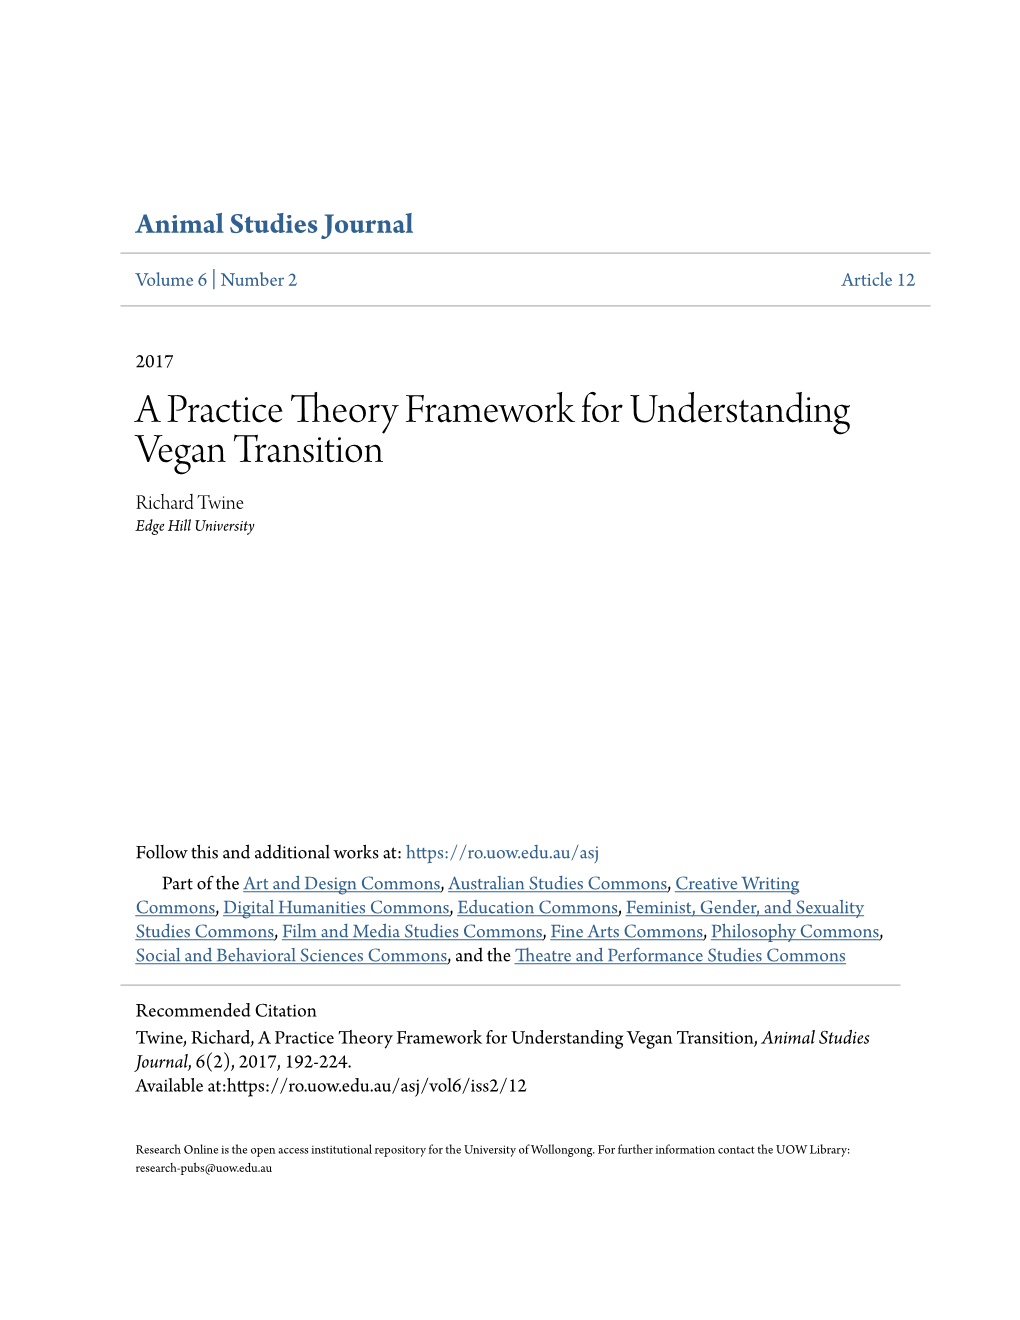 A Practice Theory Framework for Understanding Vegan Transition Richard Twine Edge Hill University